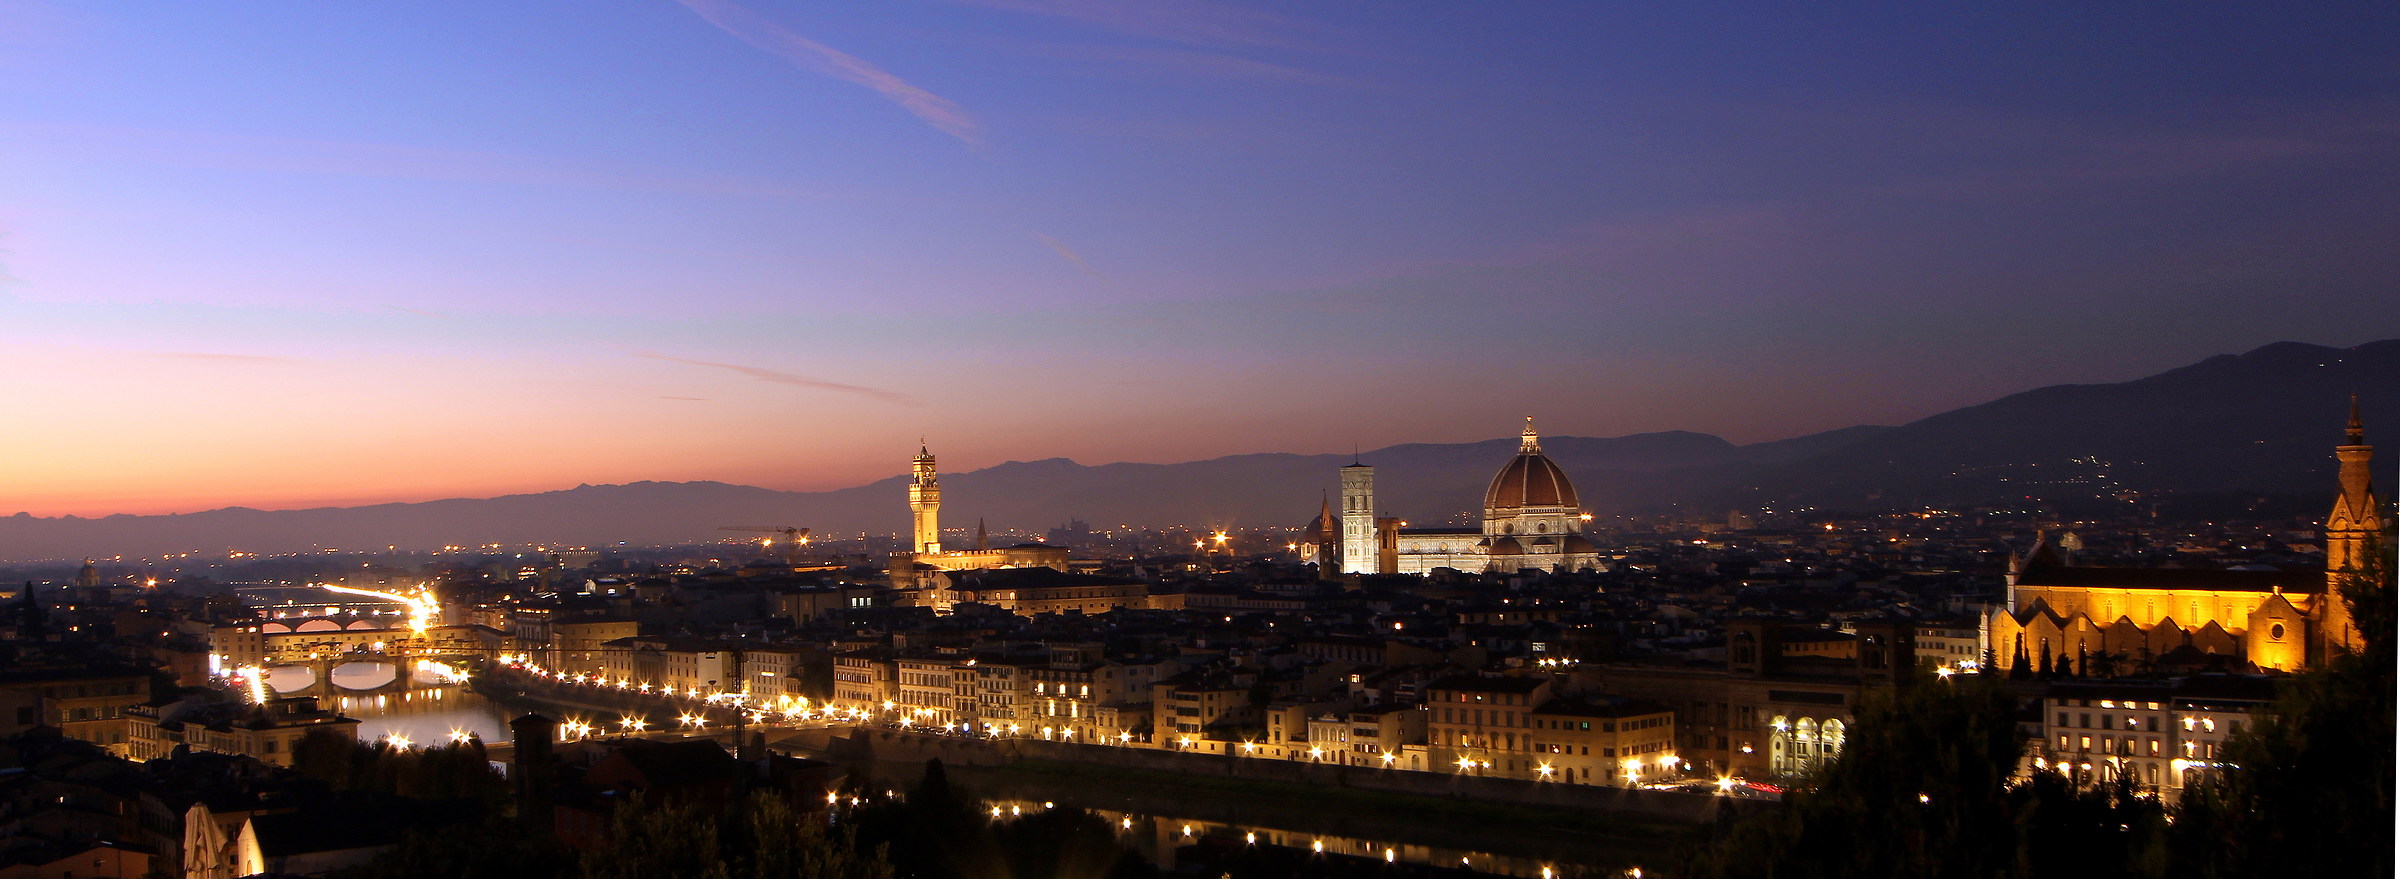 Firenze da piazzale Michelangelo e luci...